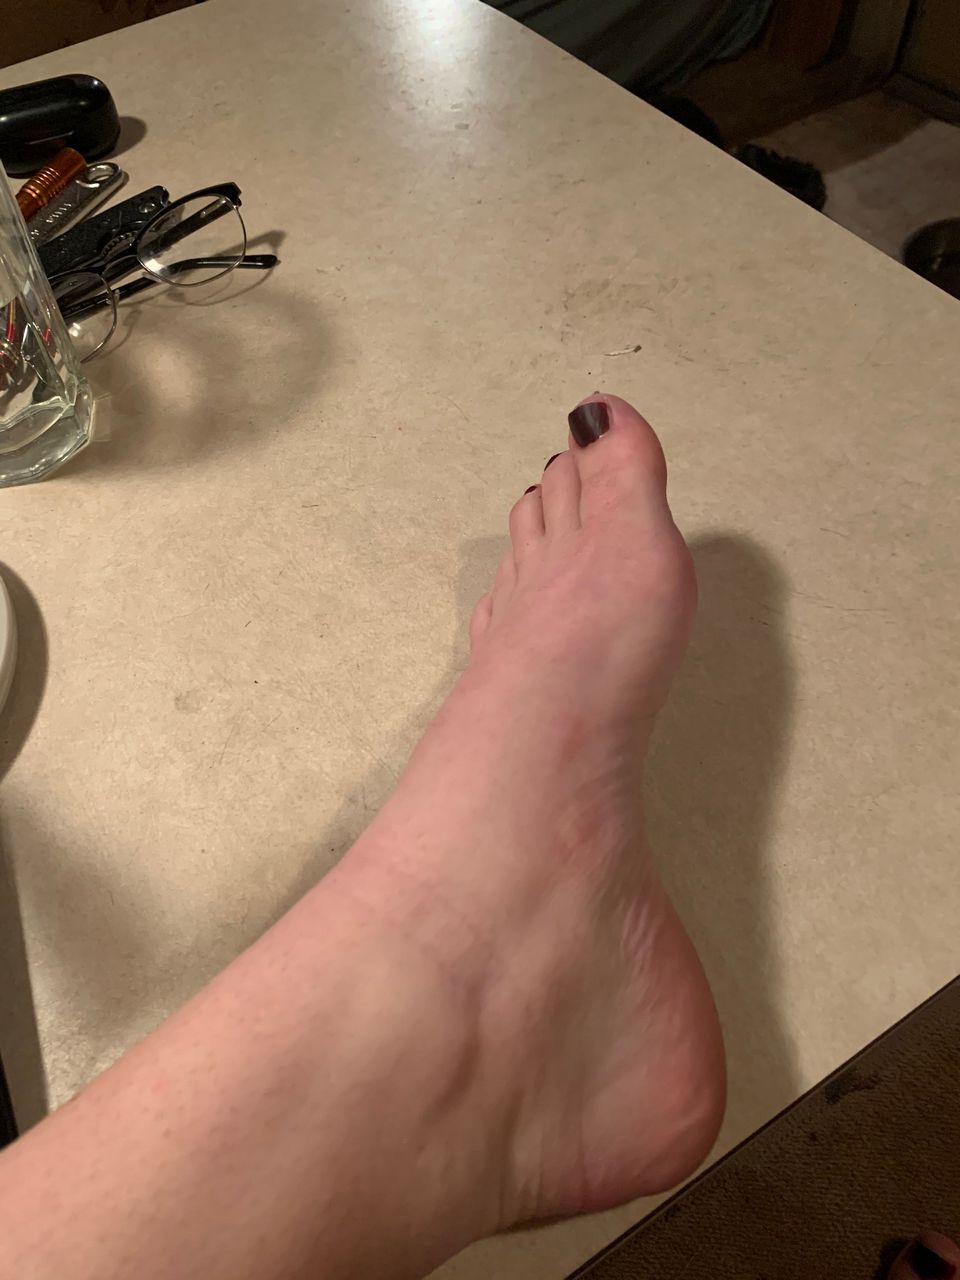 Dani Queen Freshly Painted Toe Nails